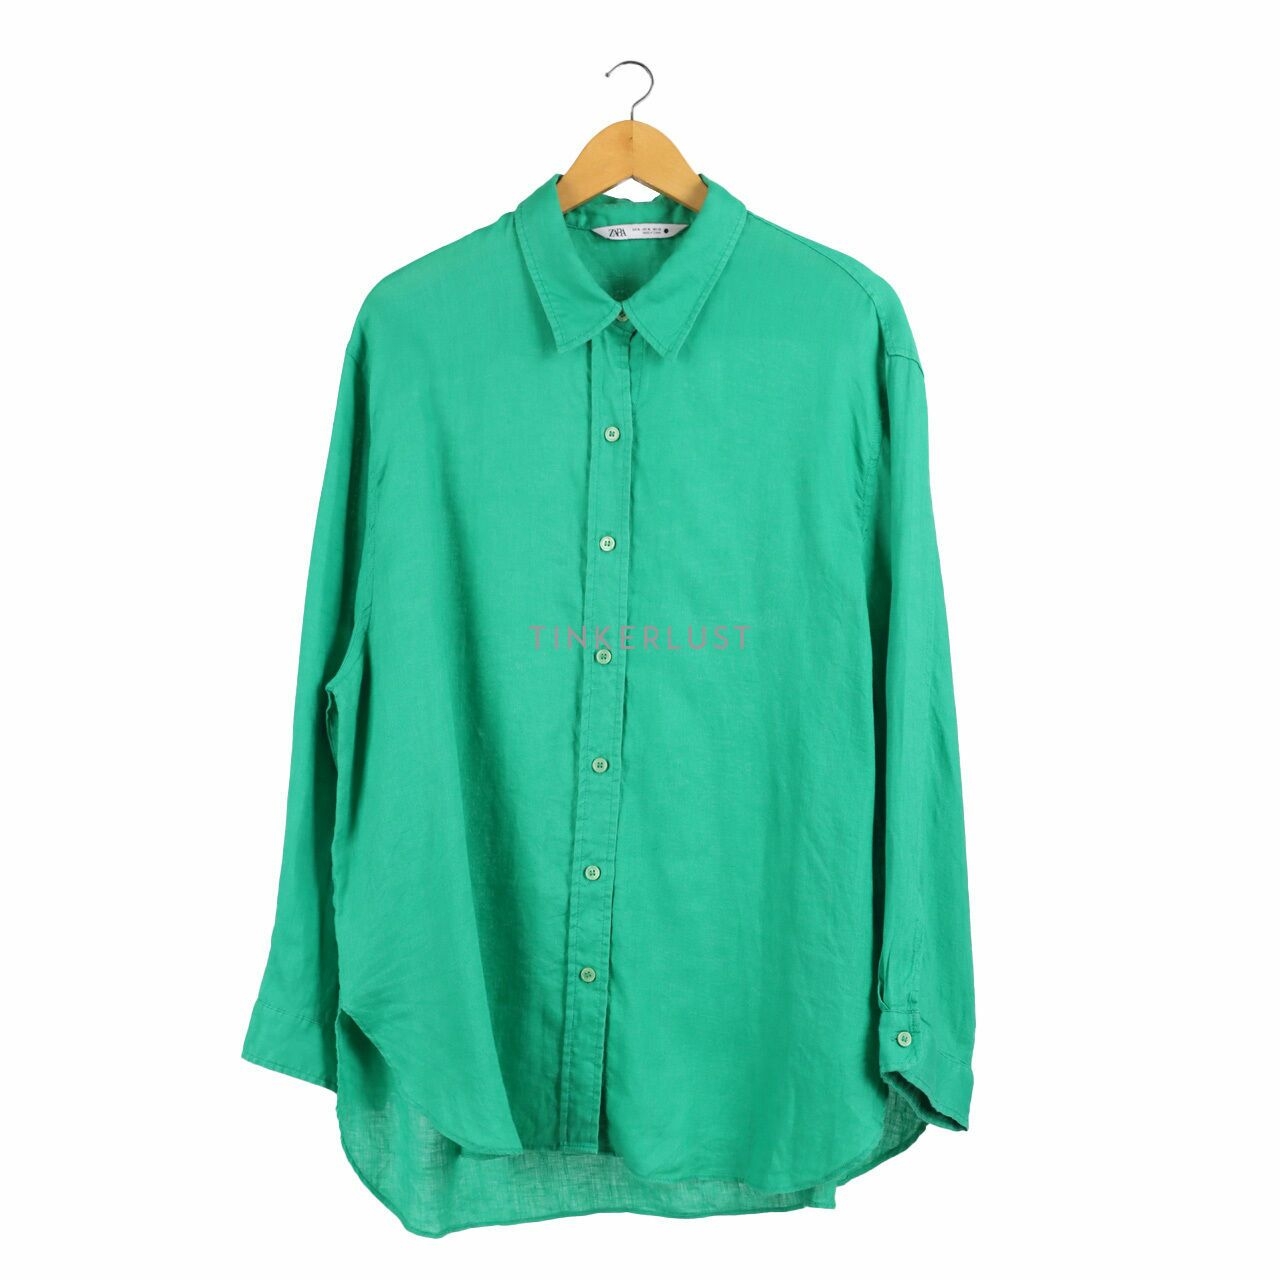 Zara Green Shirt